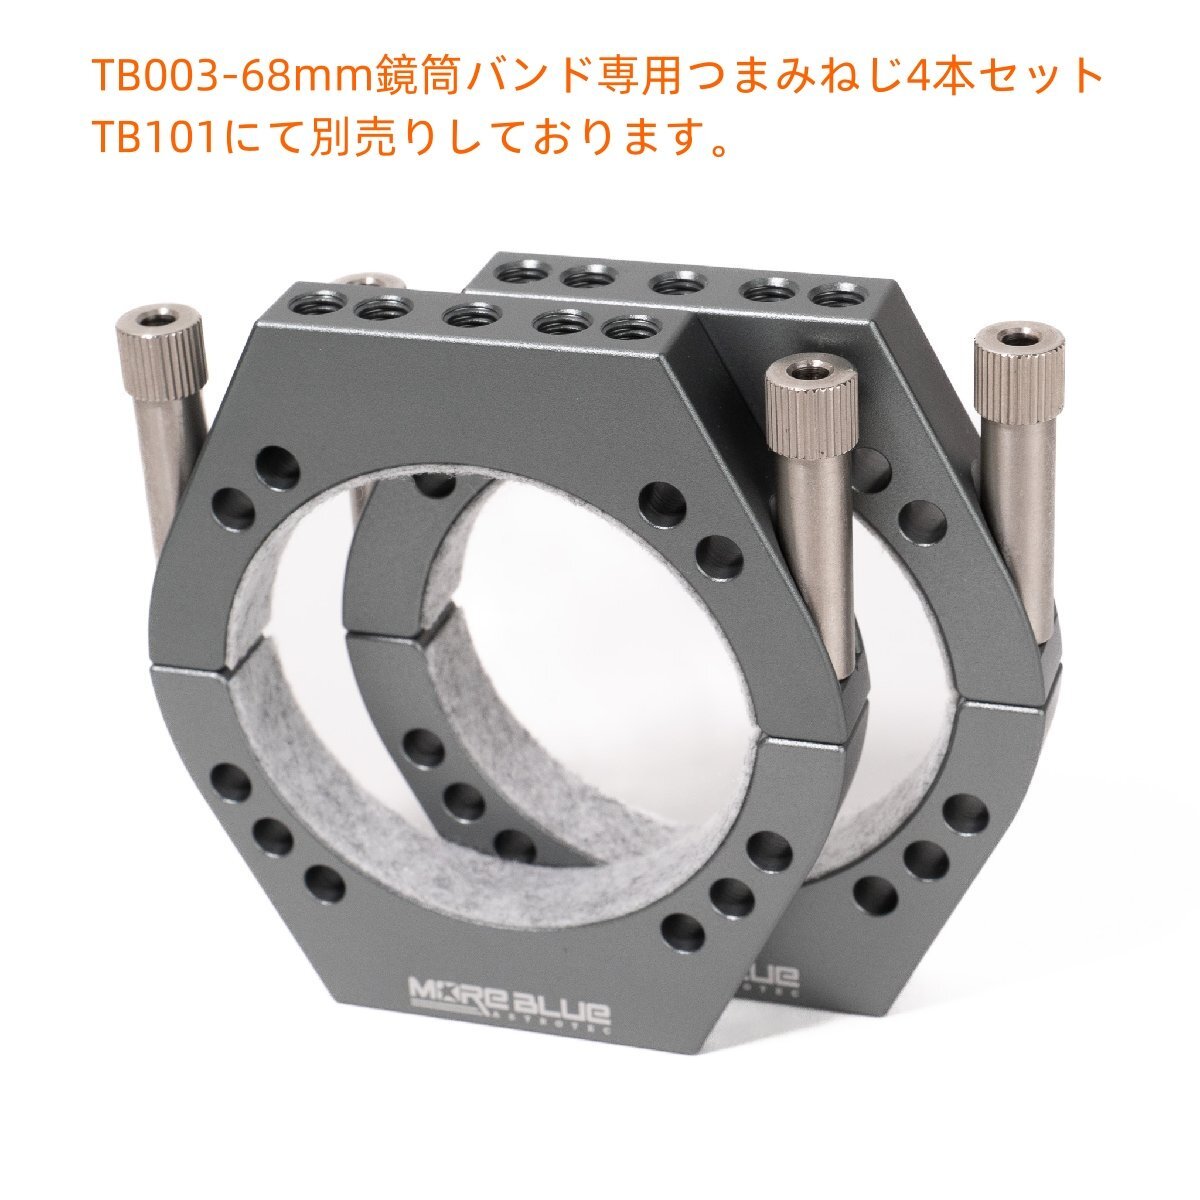 TB003- super light weight . design inside diameter 68mm mirror tube band click post uniform carriage 185 jpy 